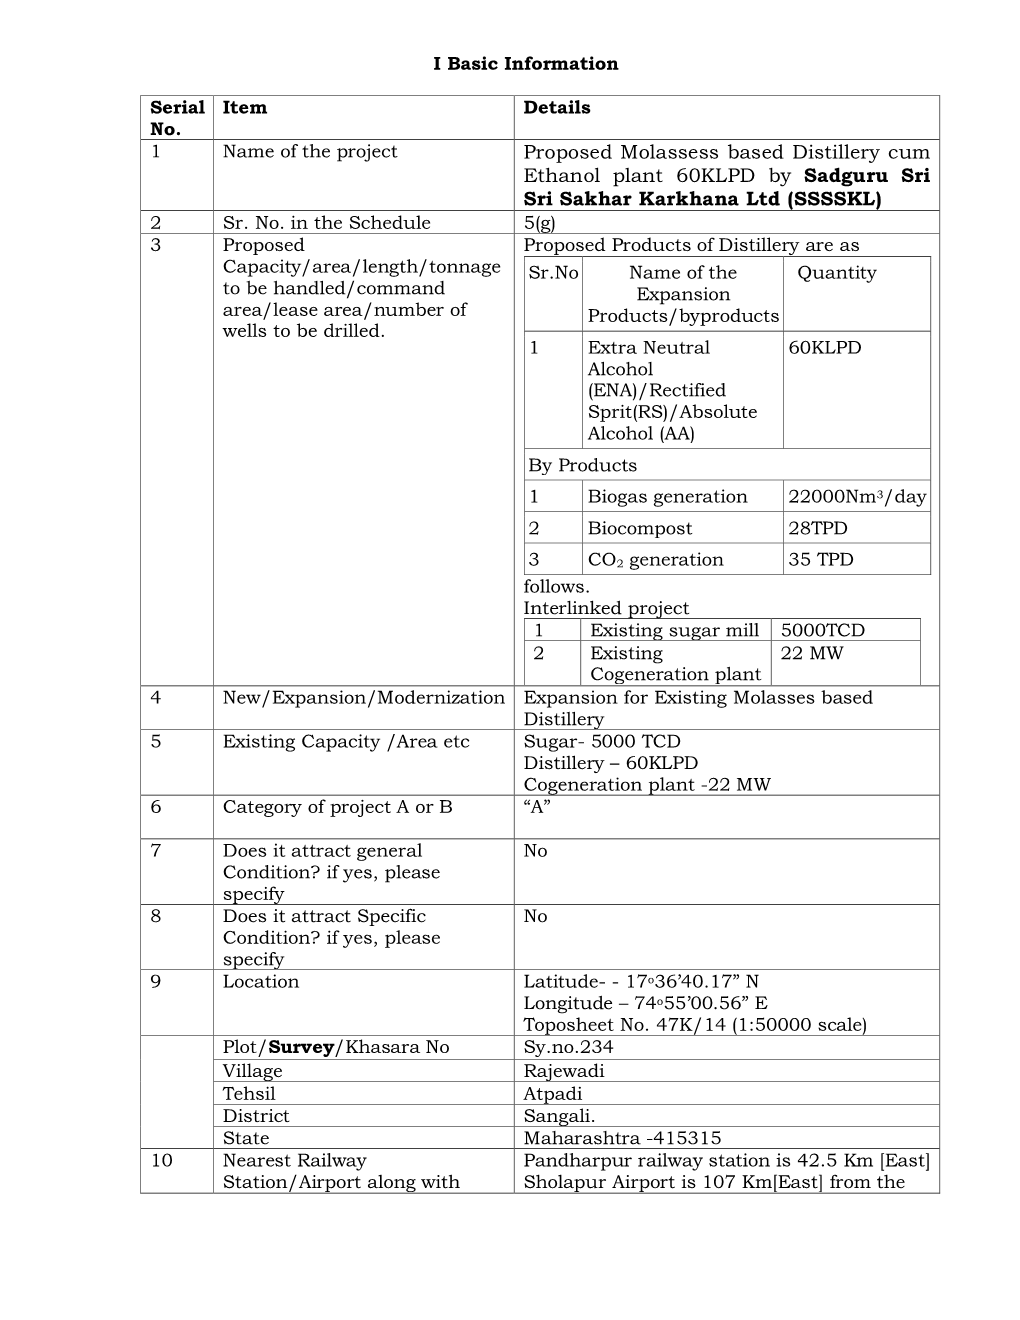 Proposed Molassess Based Distillery Cum Ethanol Plant 60KLPD by Sadguru Sri Sri Sakhar Karkhana Ltd (SSSSKL) 2 Sr